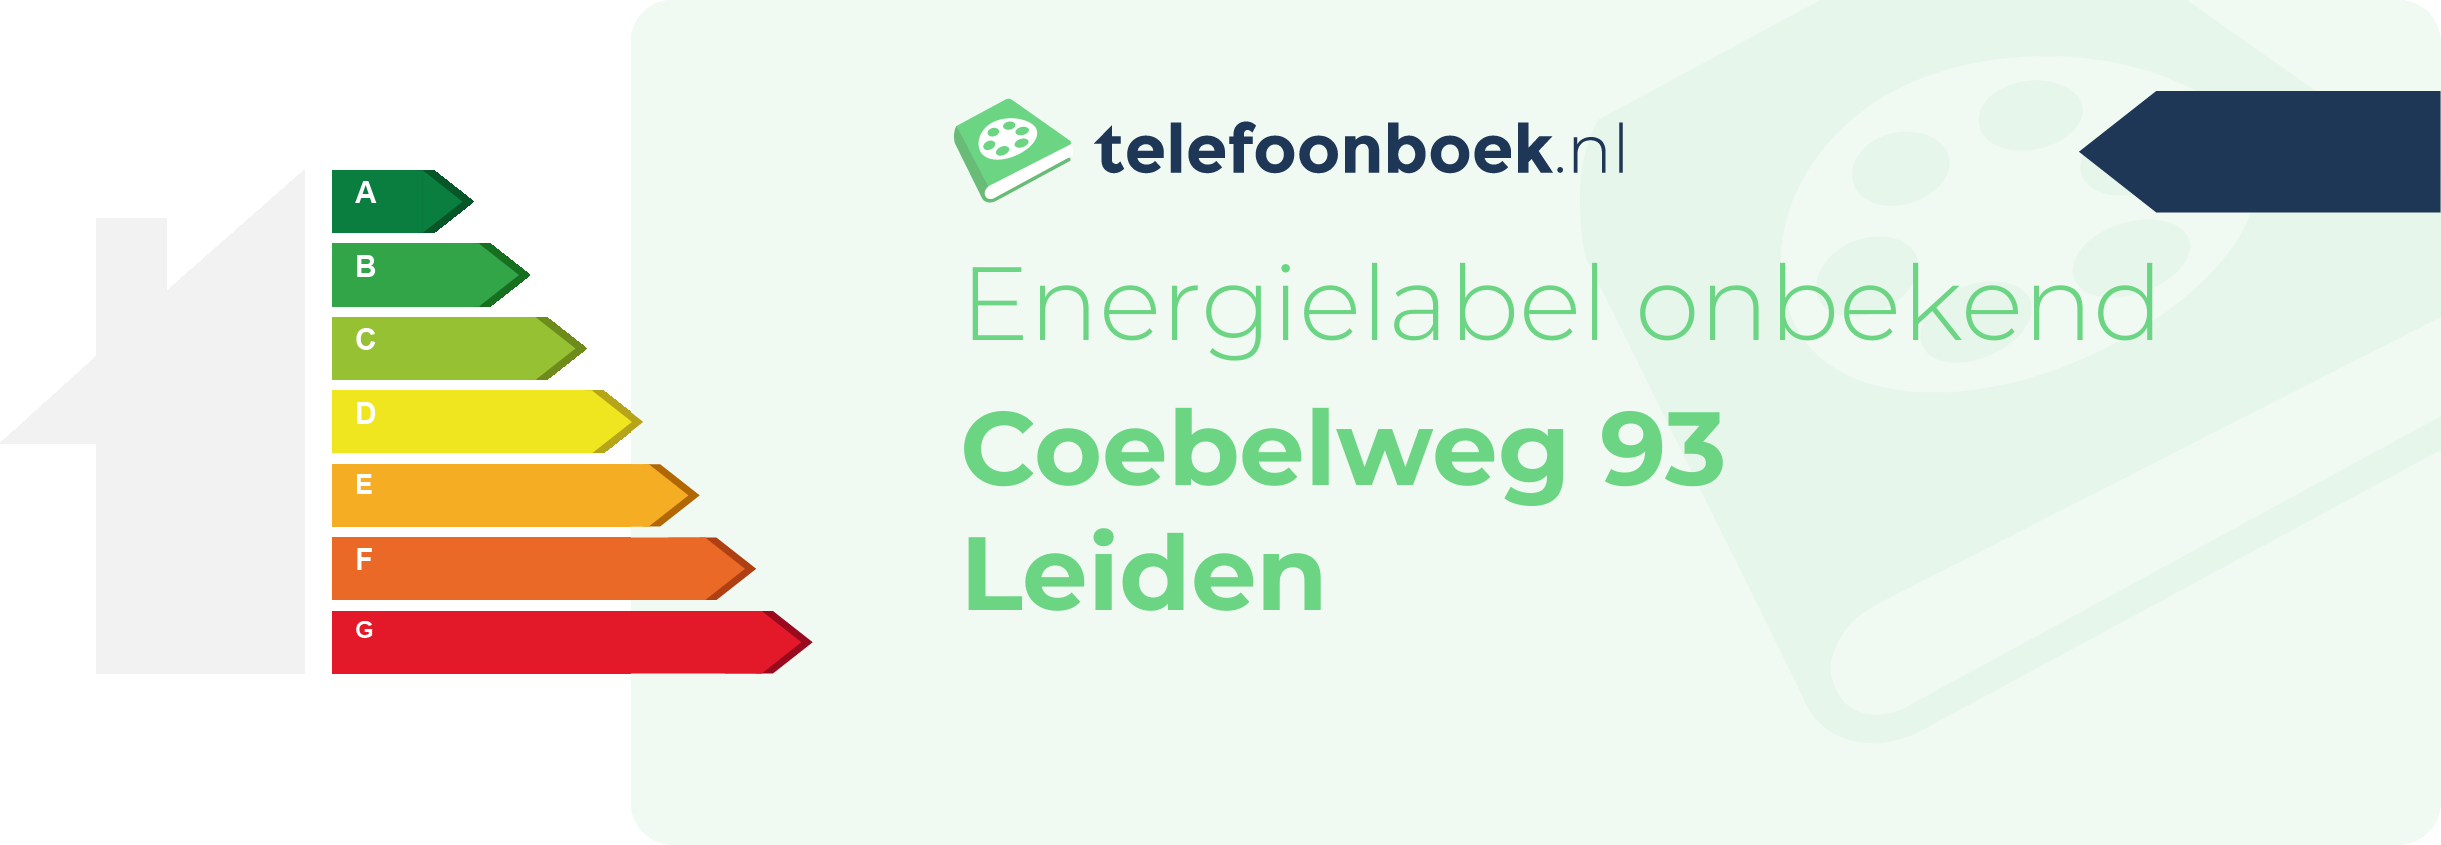 Energielabel Coebelweg 93 Leiden